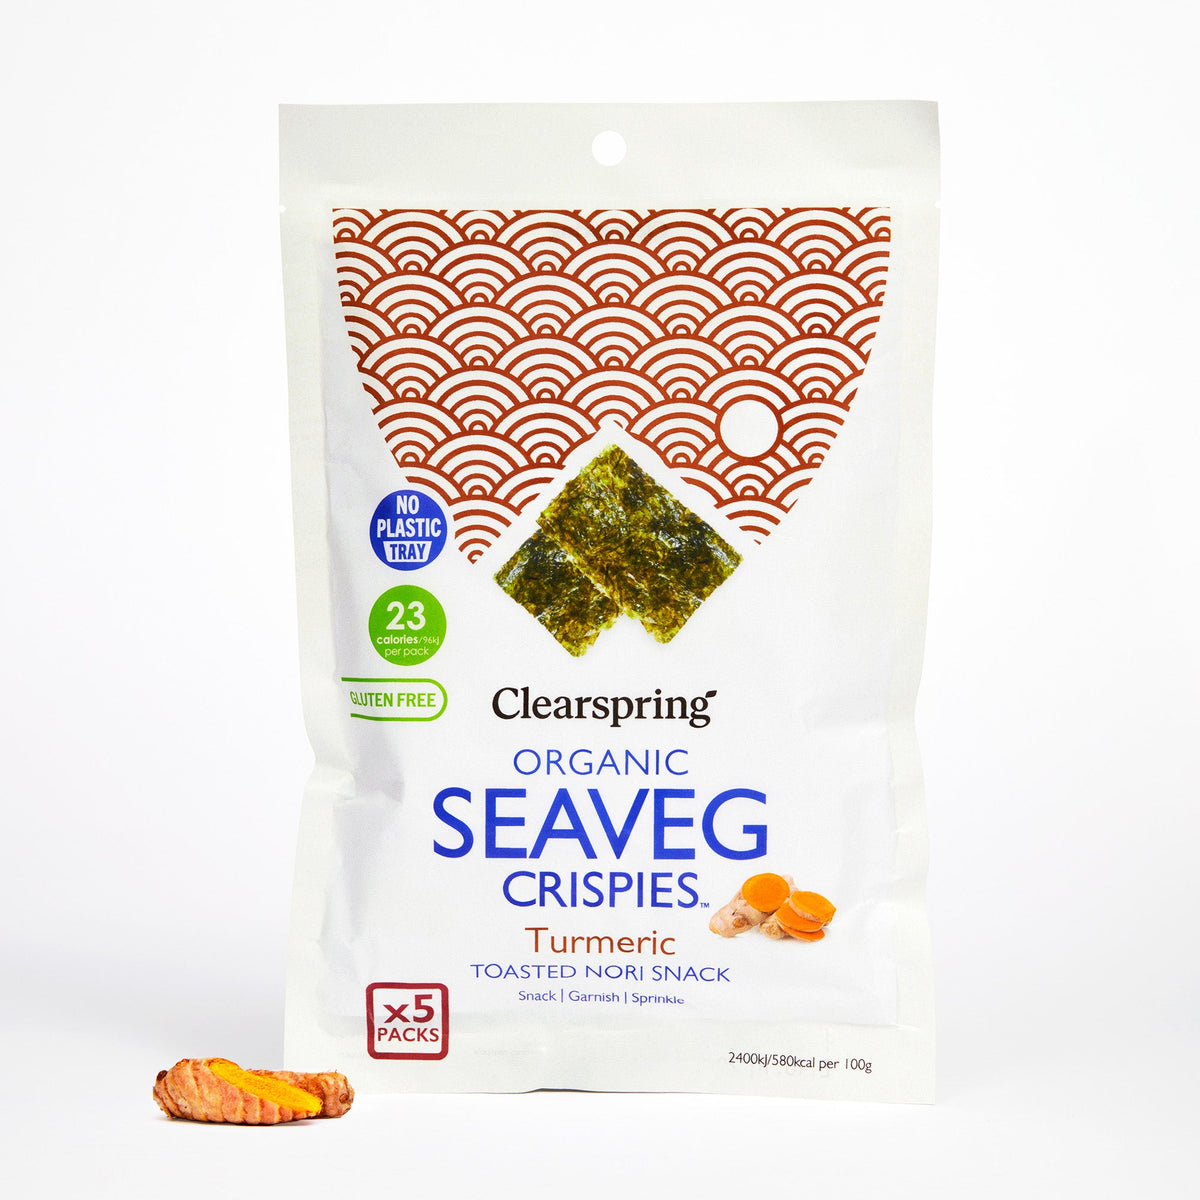 Organic Seaveg Crispies Multipack - Turmeric (Crispy Seaweed Thins) (6 Pack)